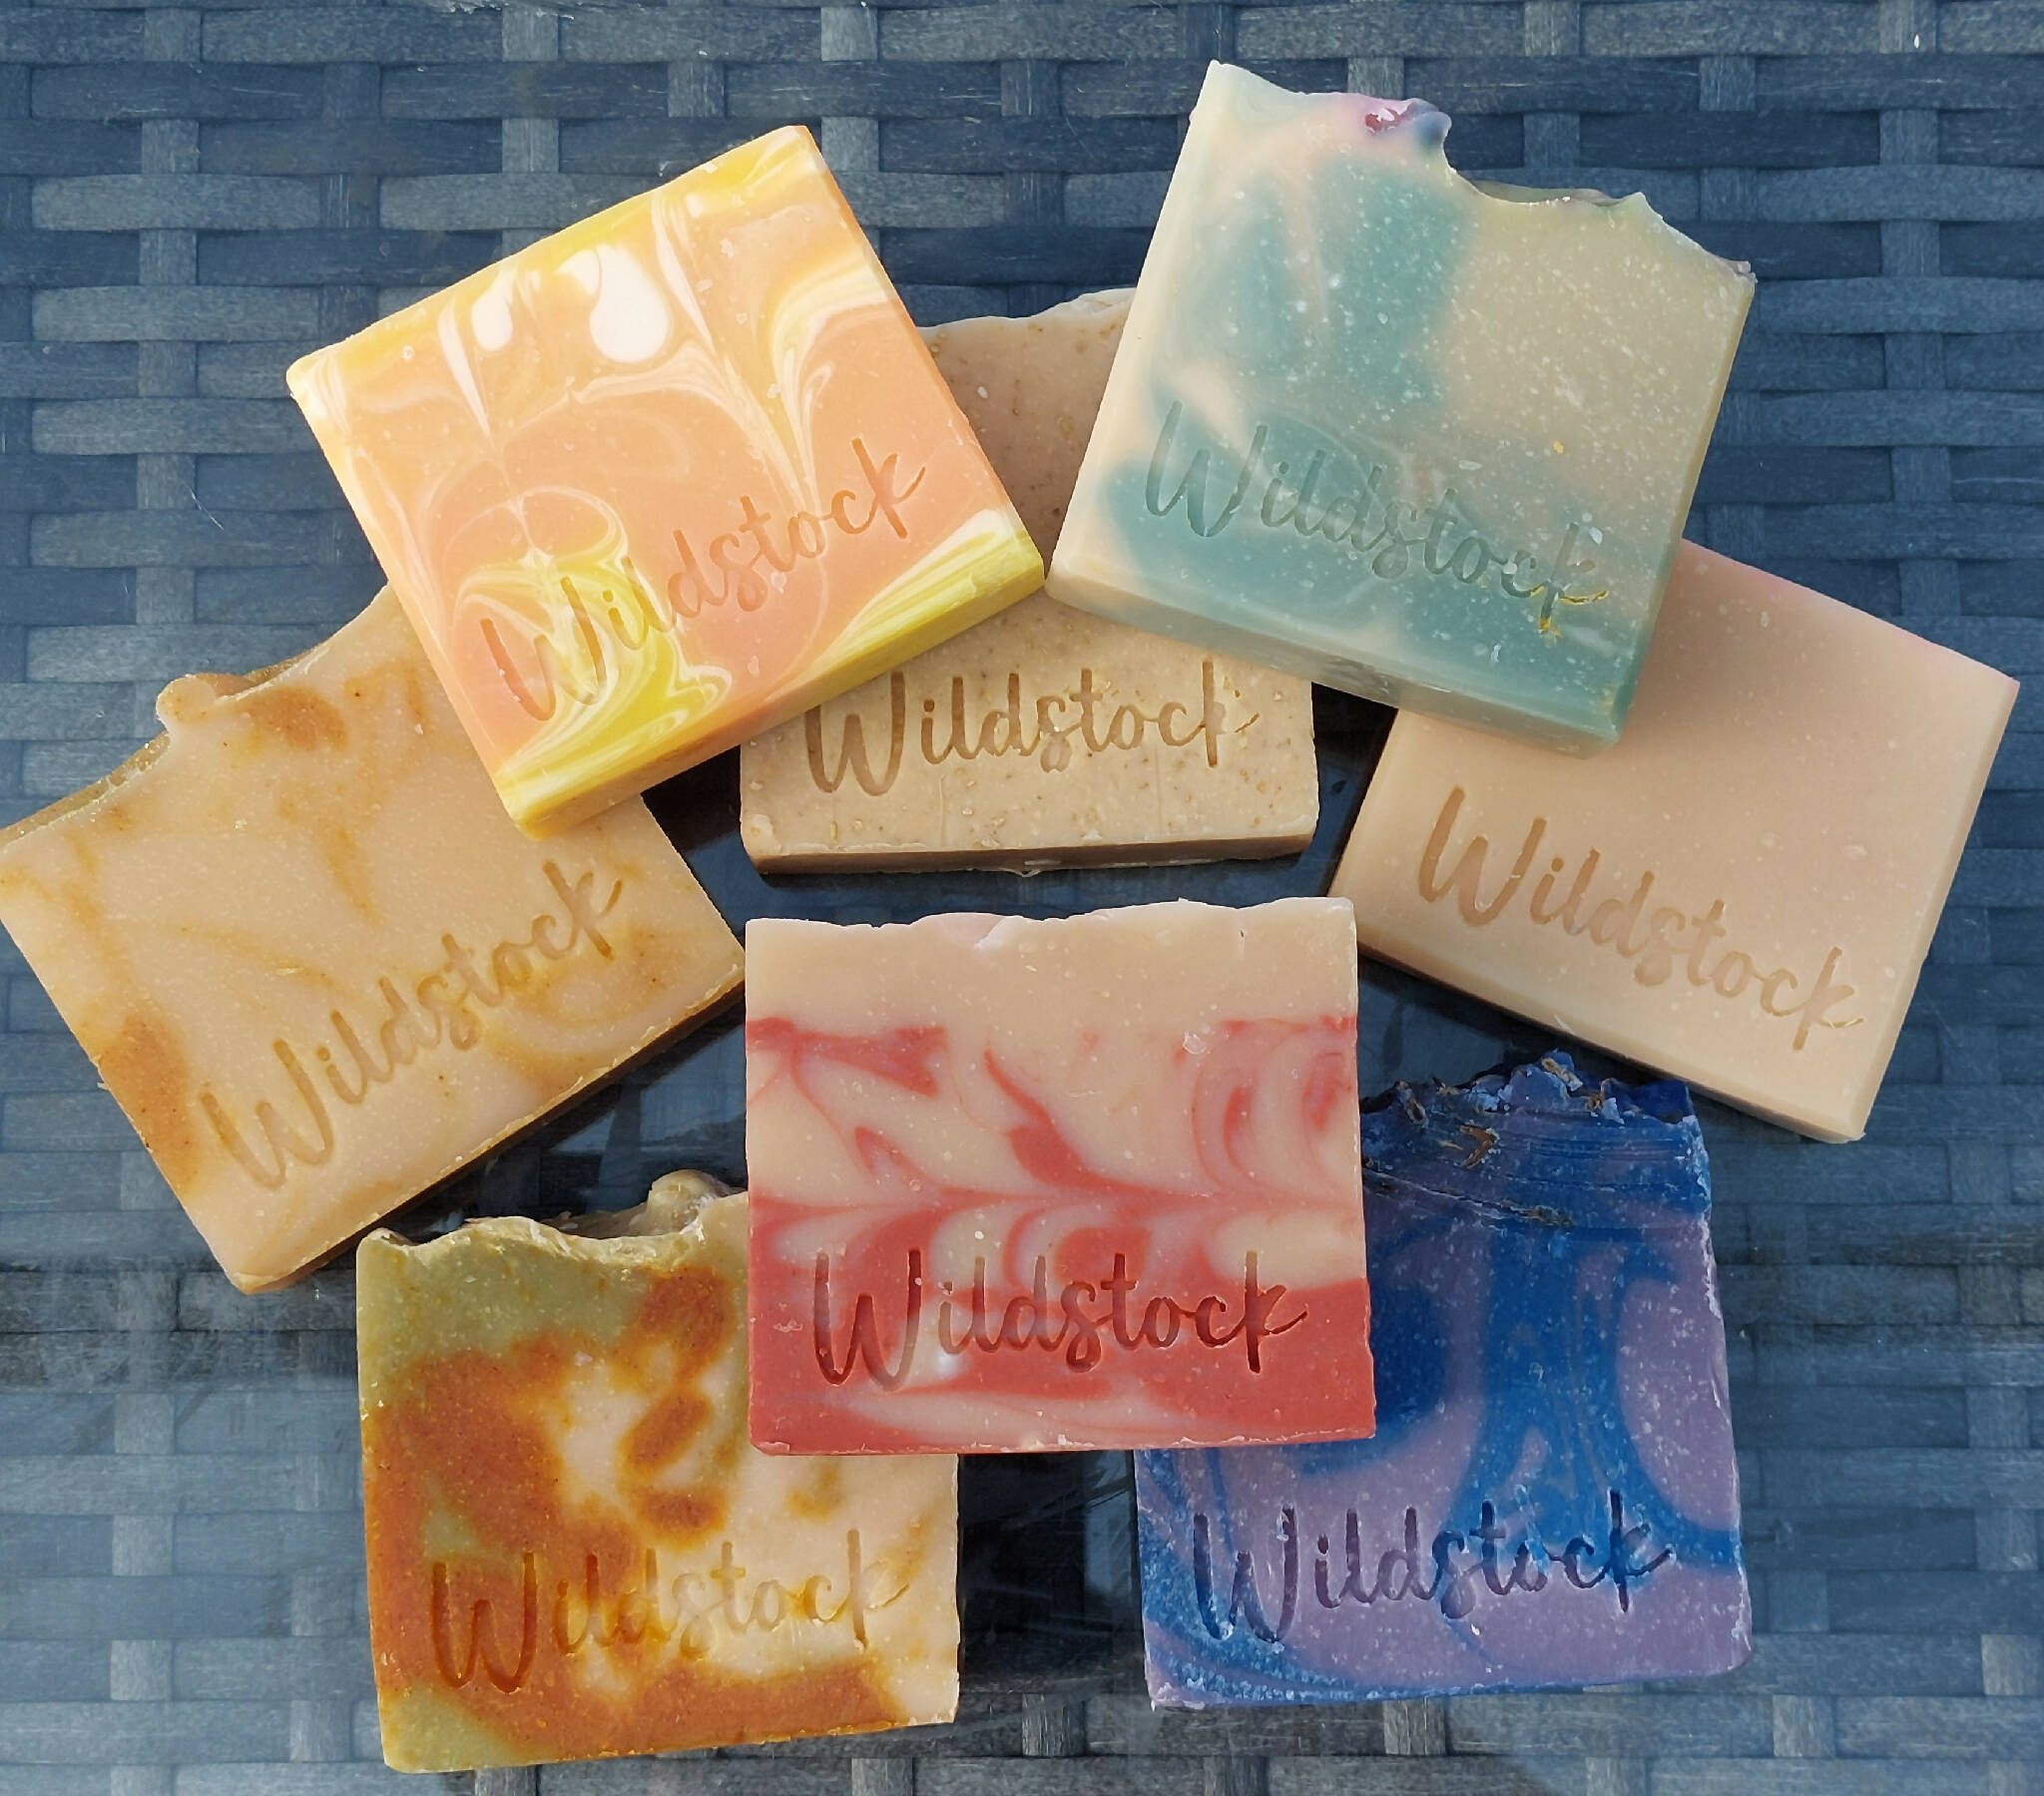 Wildstock 'Lucky Dip' Goat Milk Soap Collection